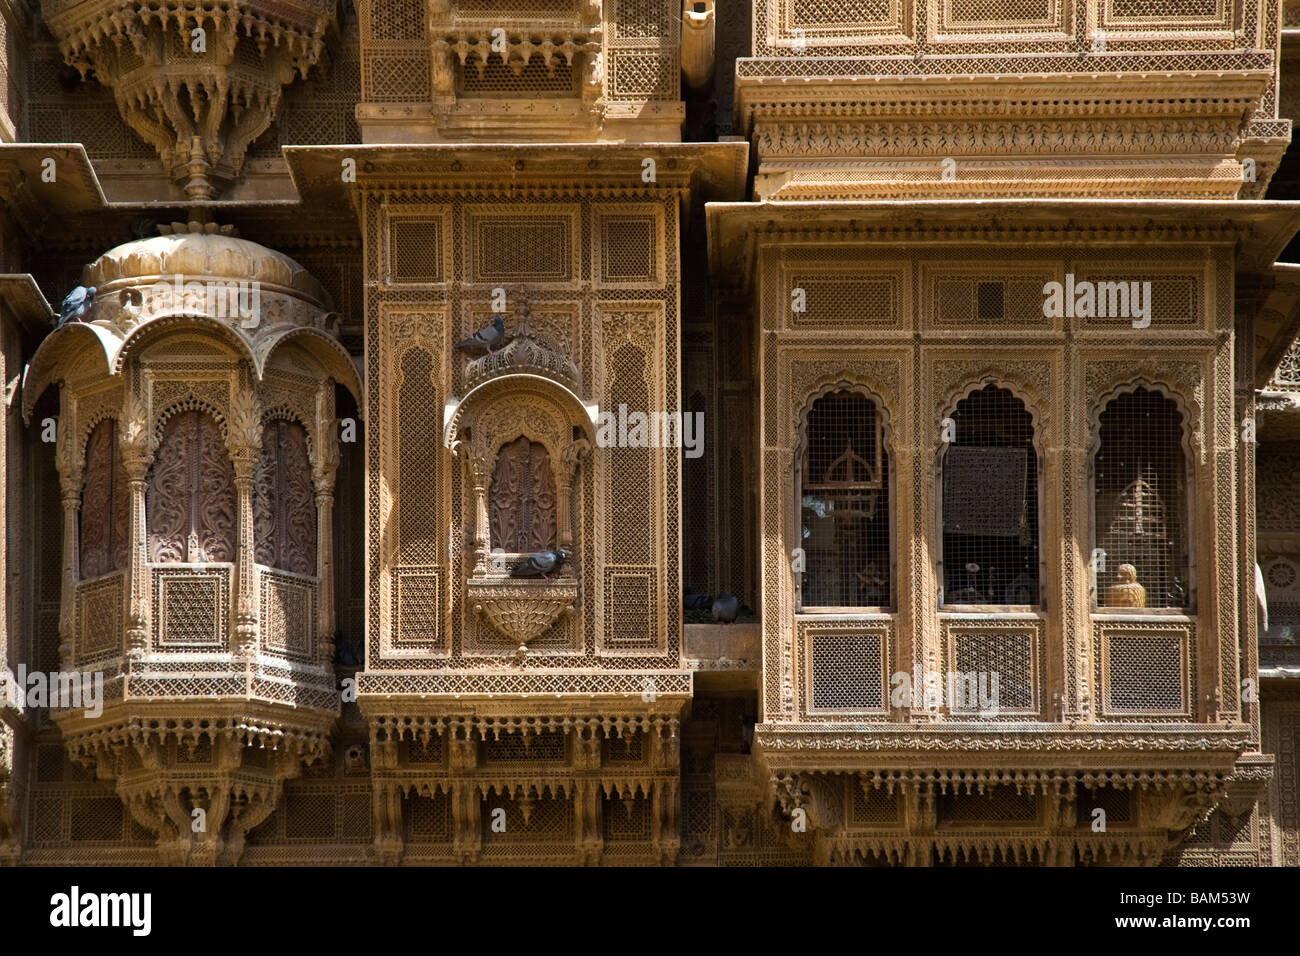 Clerestory windows and balcony of the Patwon Patwa ki Haveli Palace Jaisalmer Stock Photo